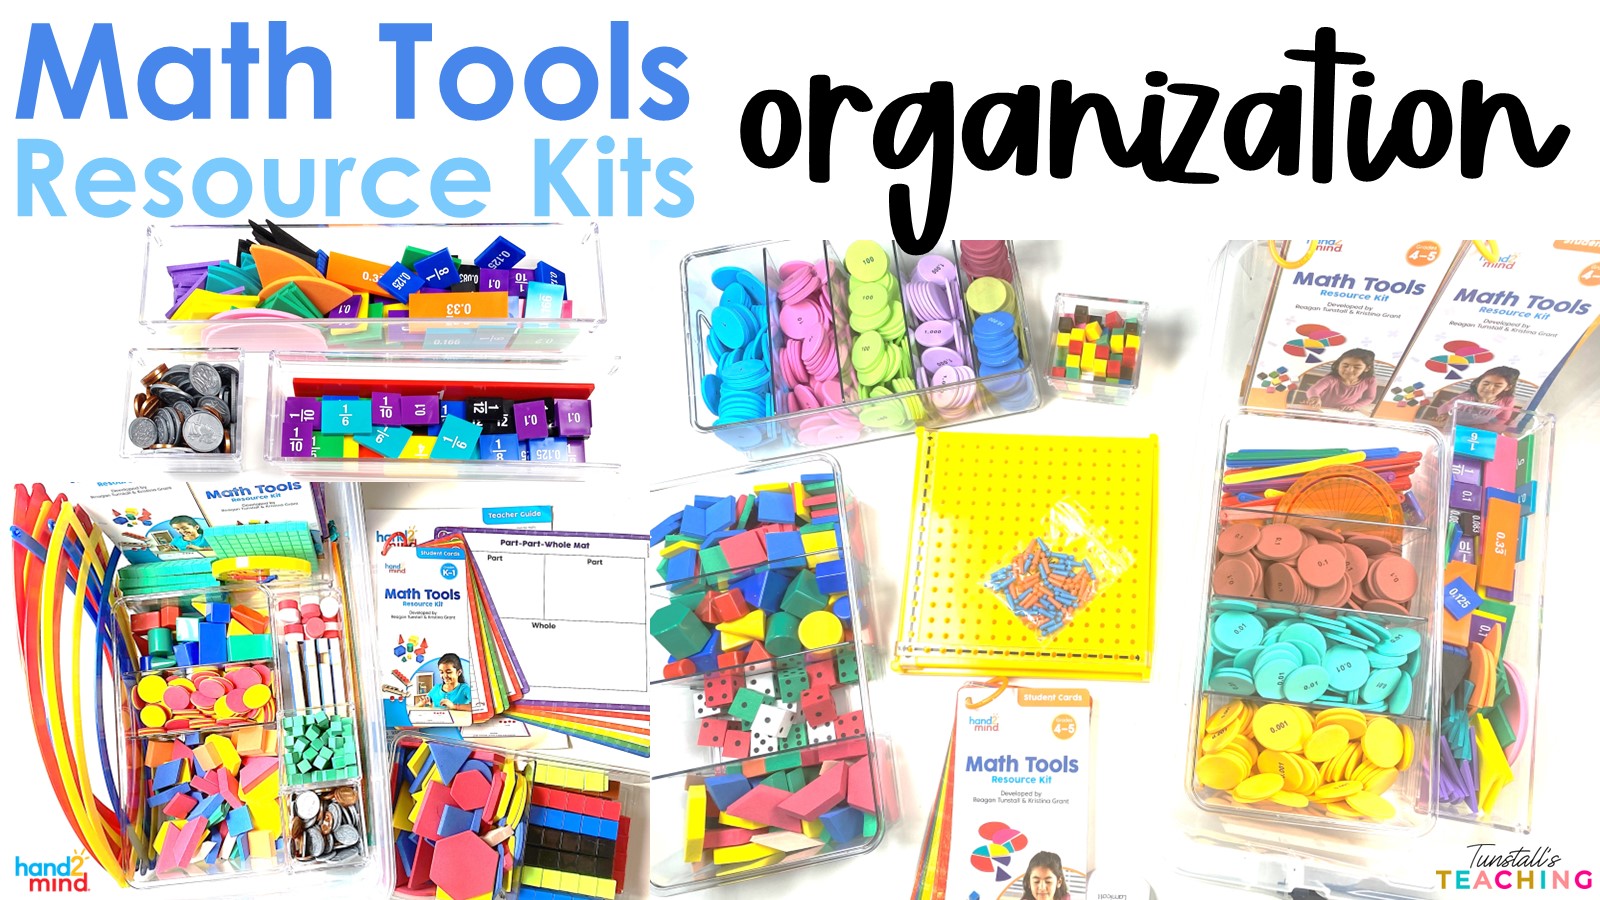 Math Tools Resource Kits Organization